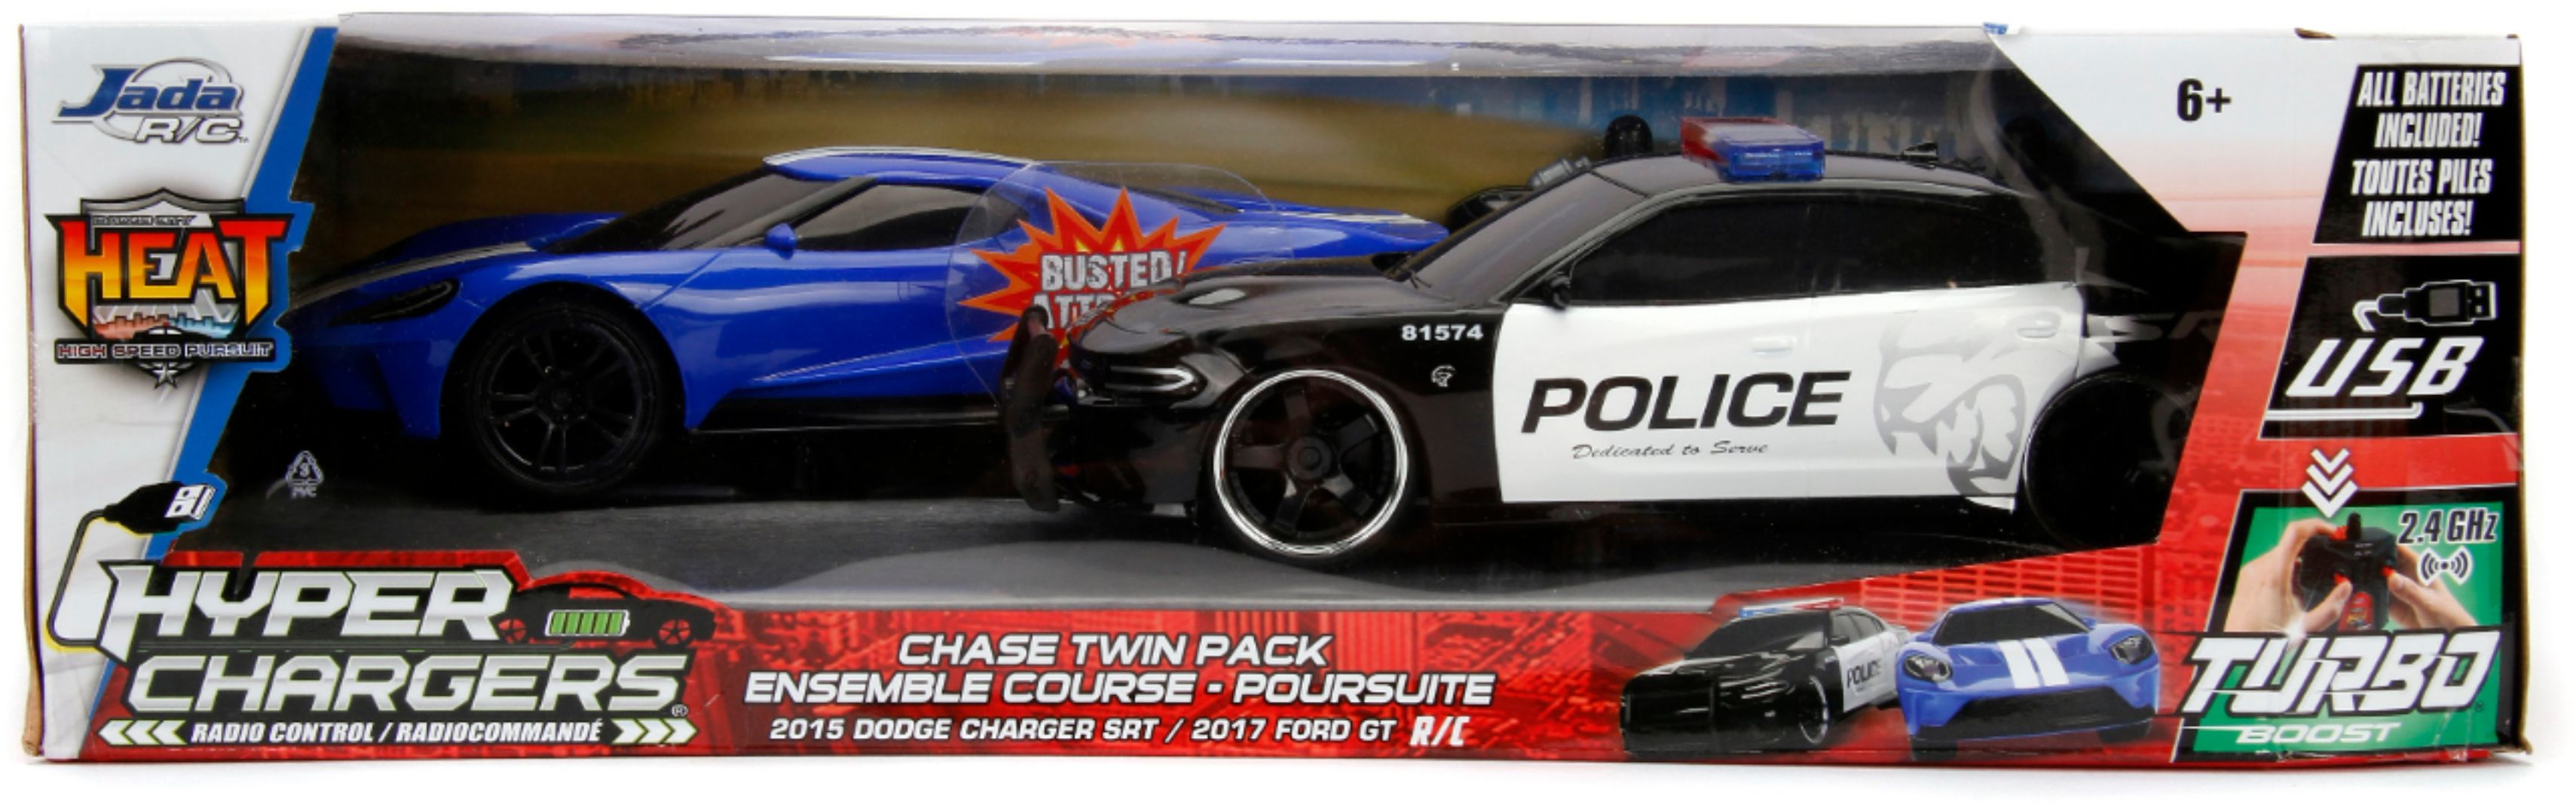 Challenger SRT8 Police Vs Corvette Sting... Jada HyperChargers Heat Twin Pack 